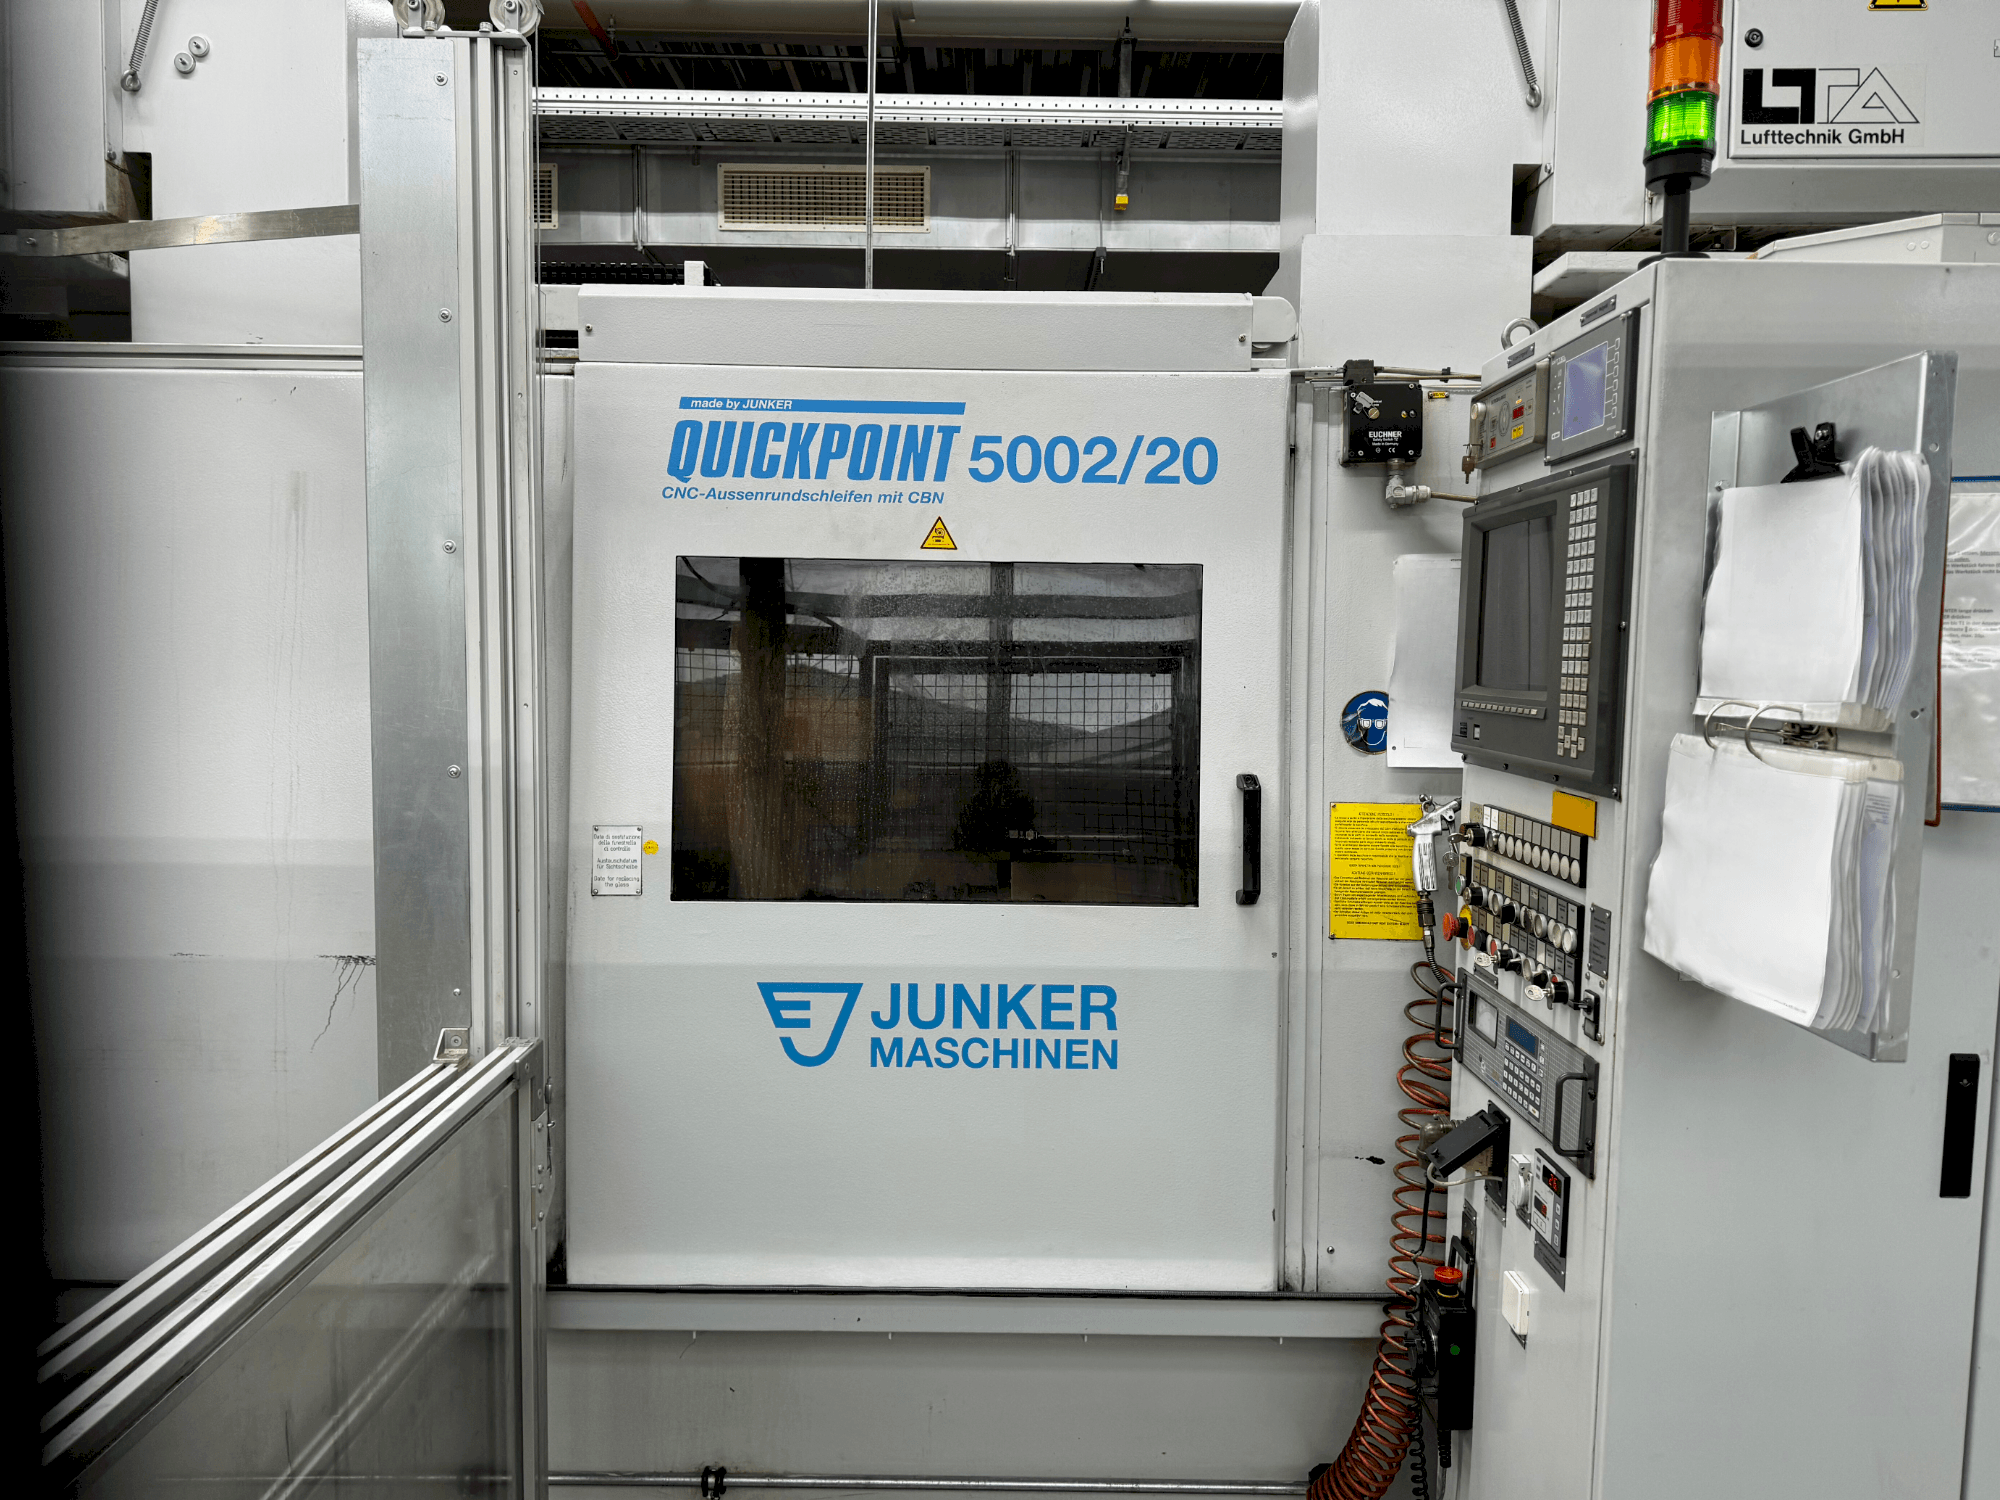 Prikaz  stroja JUNKER Quickpoint 5002/20  sprijeda